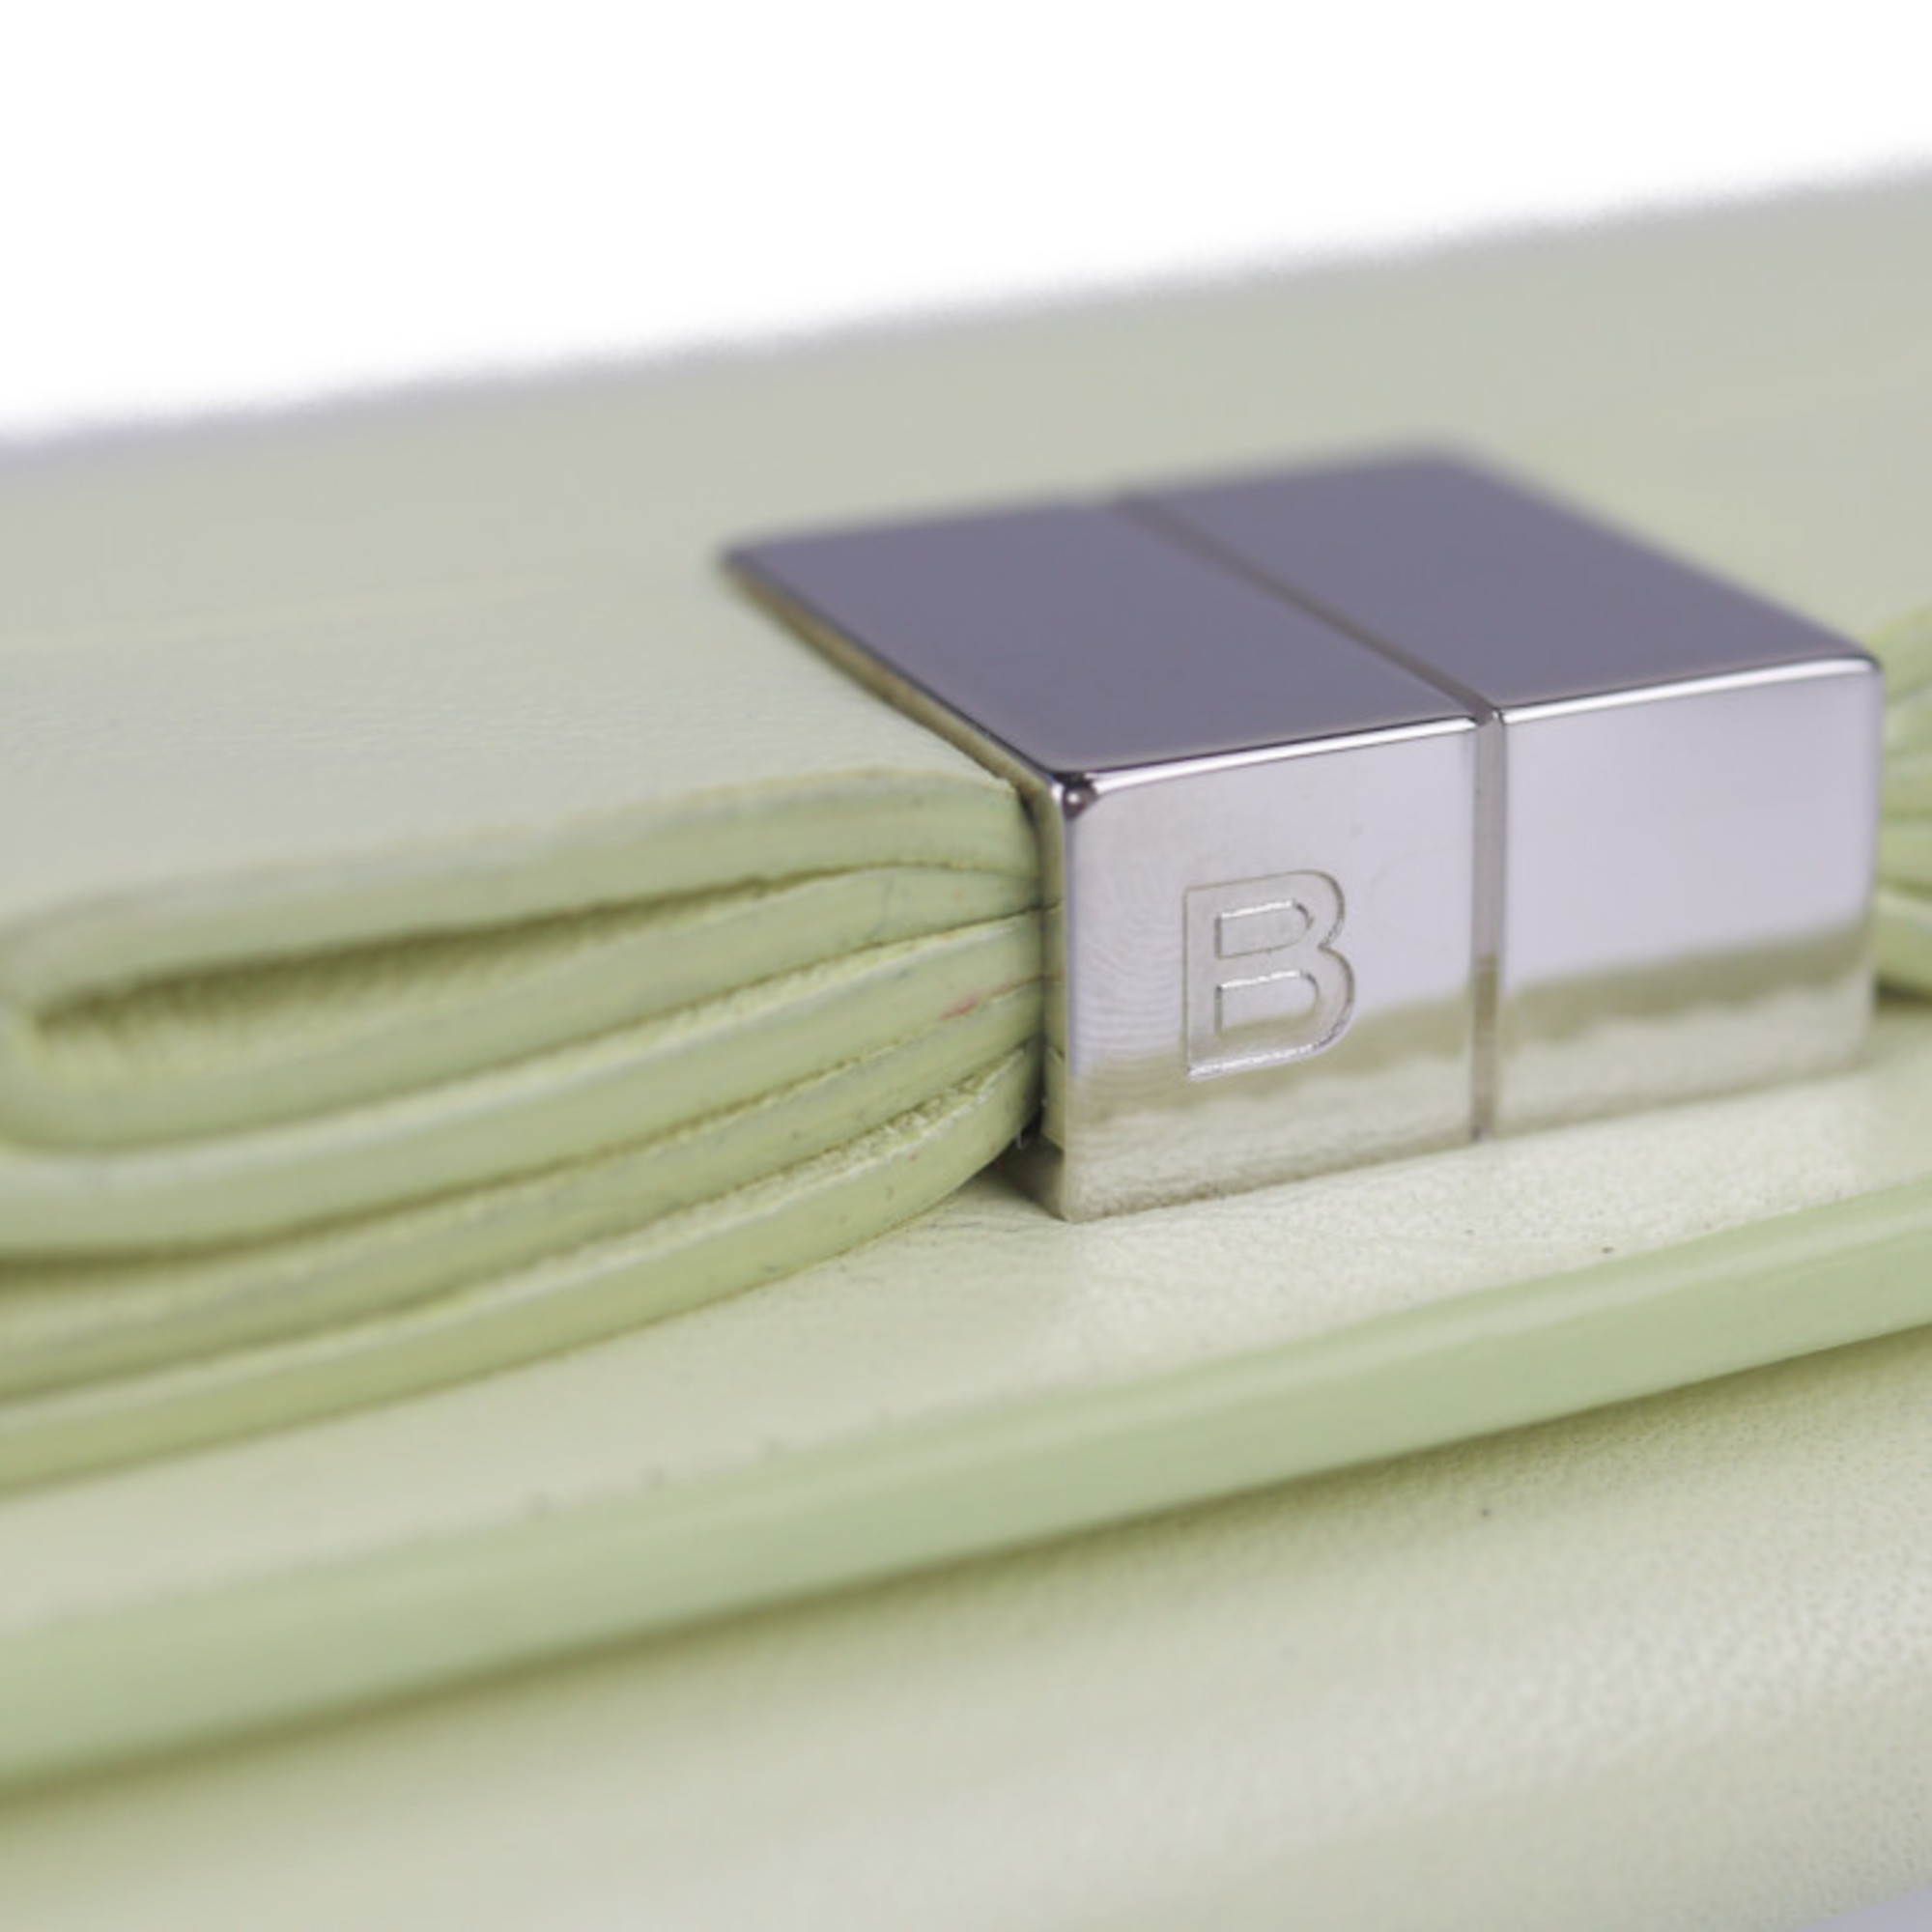 BALENCIAGA Balenciaga folio wallet 354958 leather light yellow system silver metal fittings long ribbon